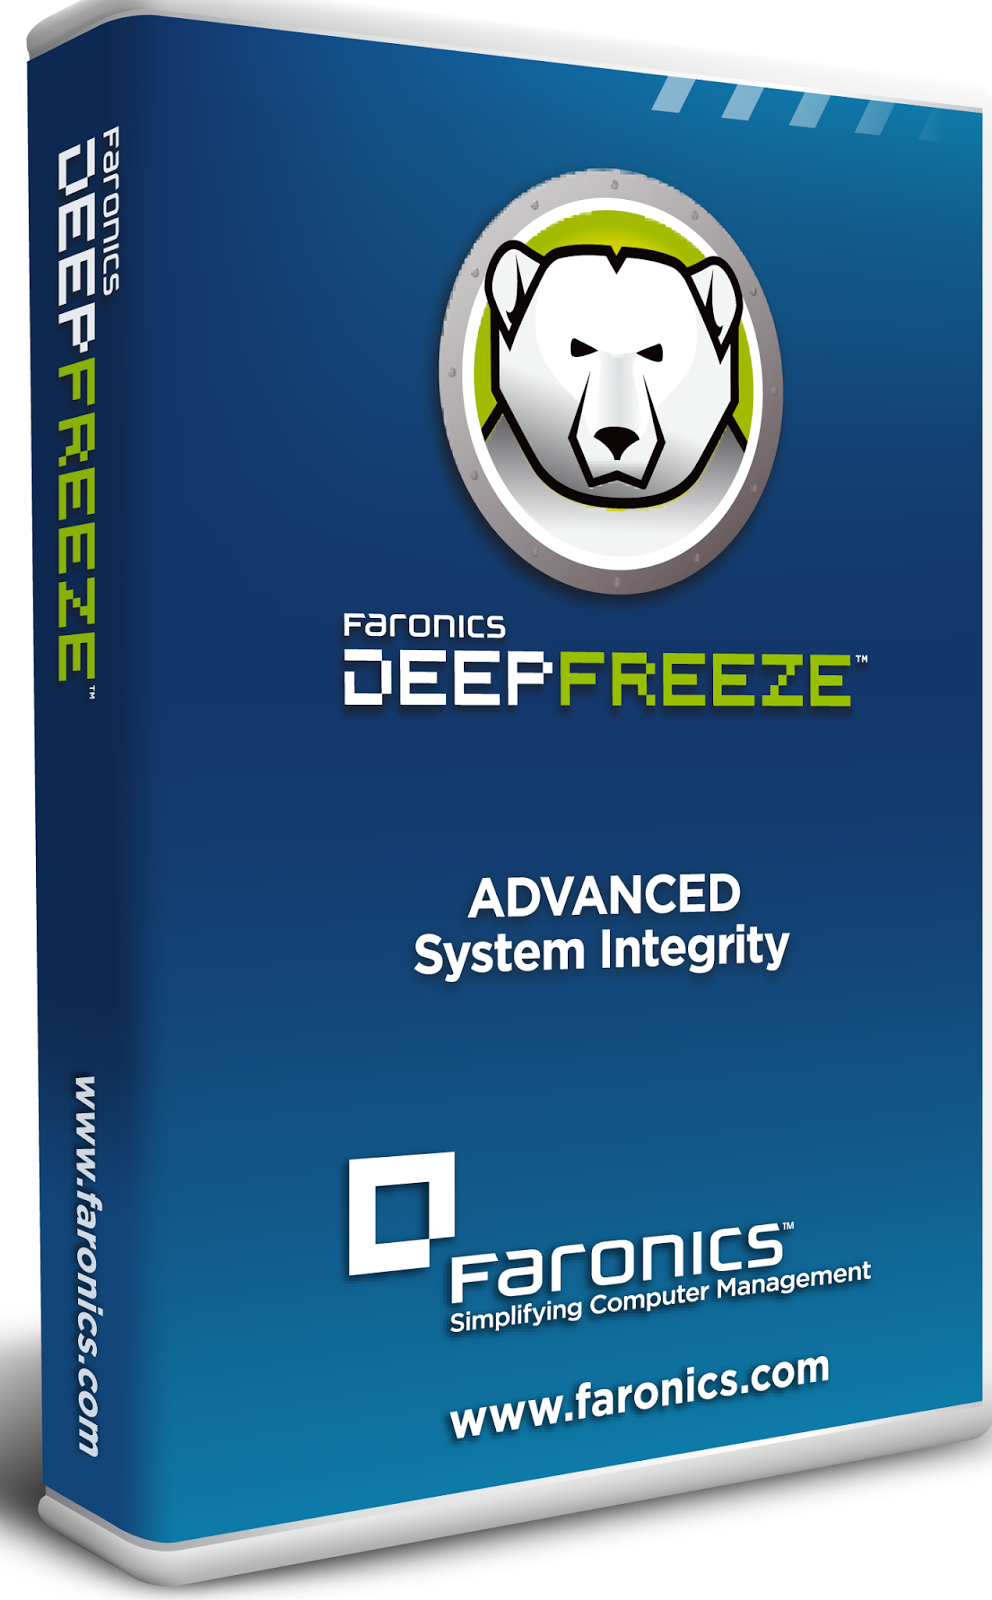 Download Deep Freeze 8 Full Version